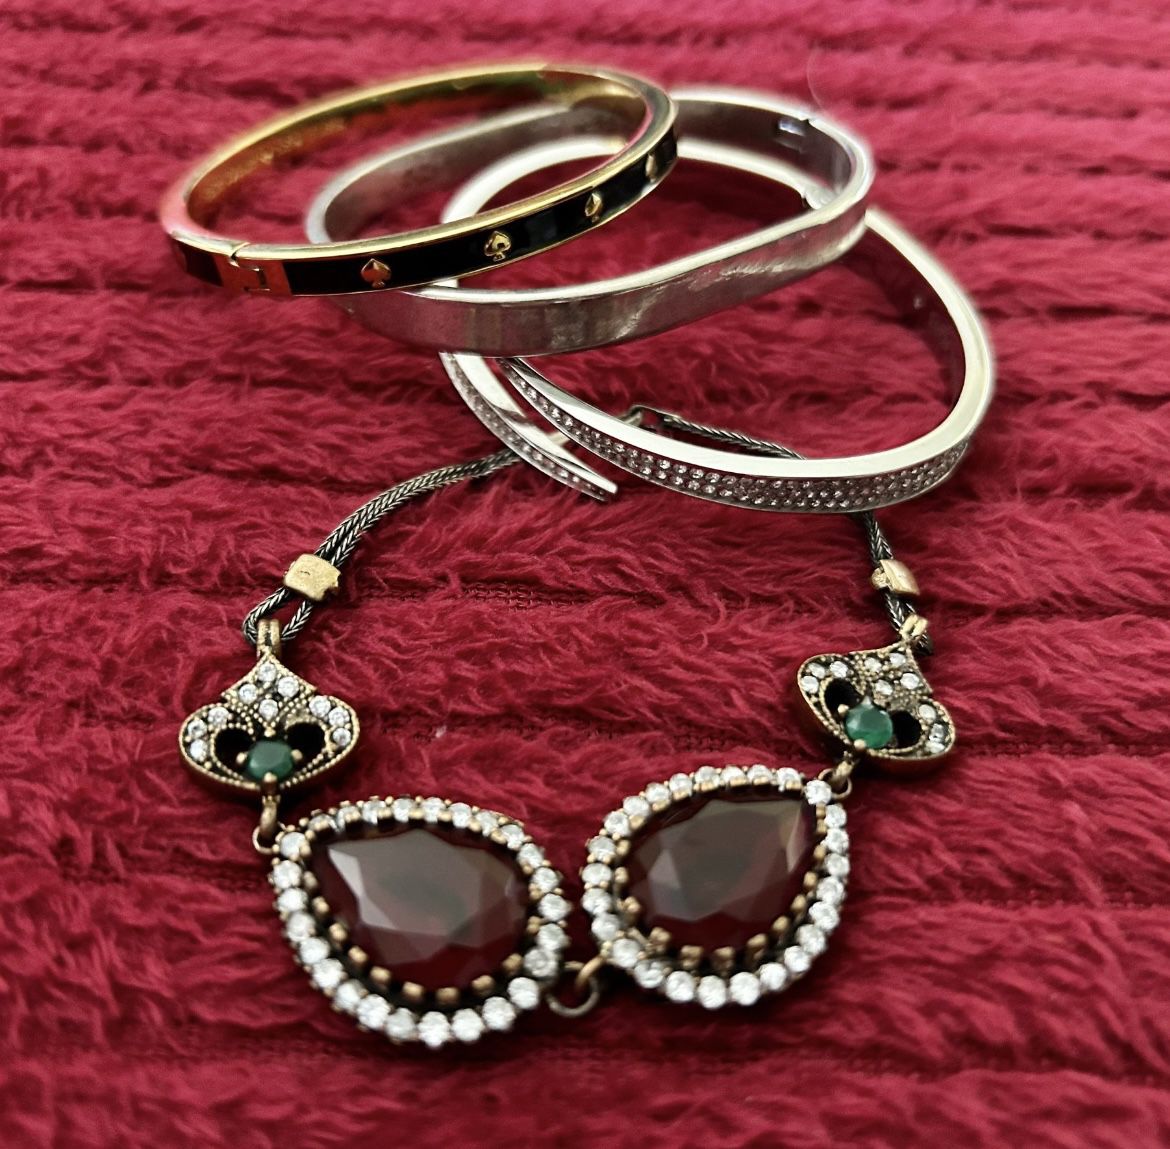 Bracelets- Kate Spade, Michael Kors, Vintage, Silver, $20 for the lot